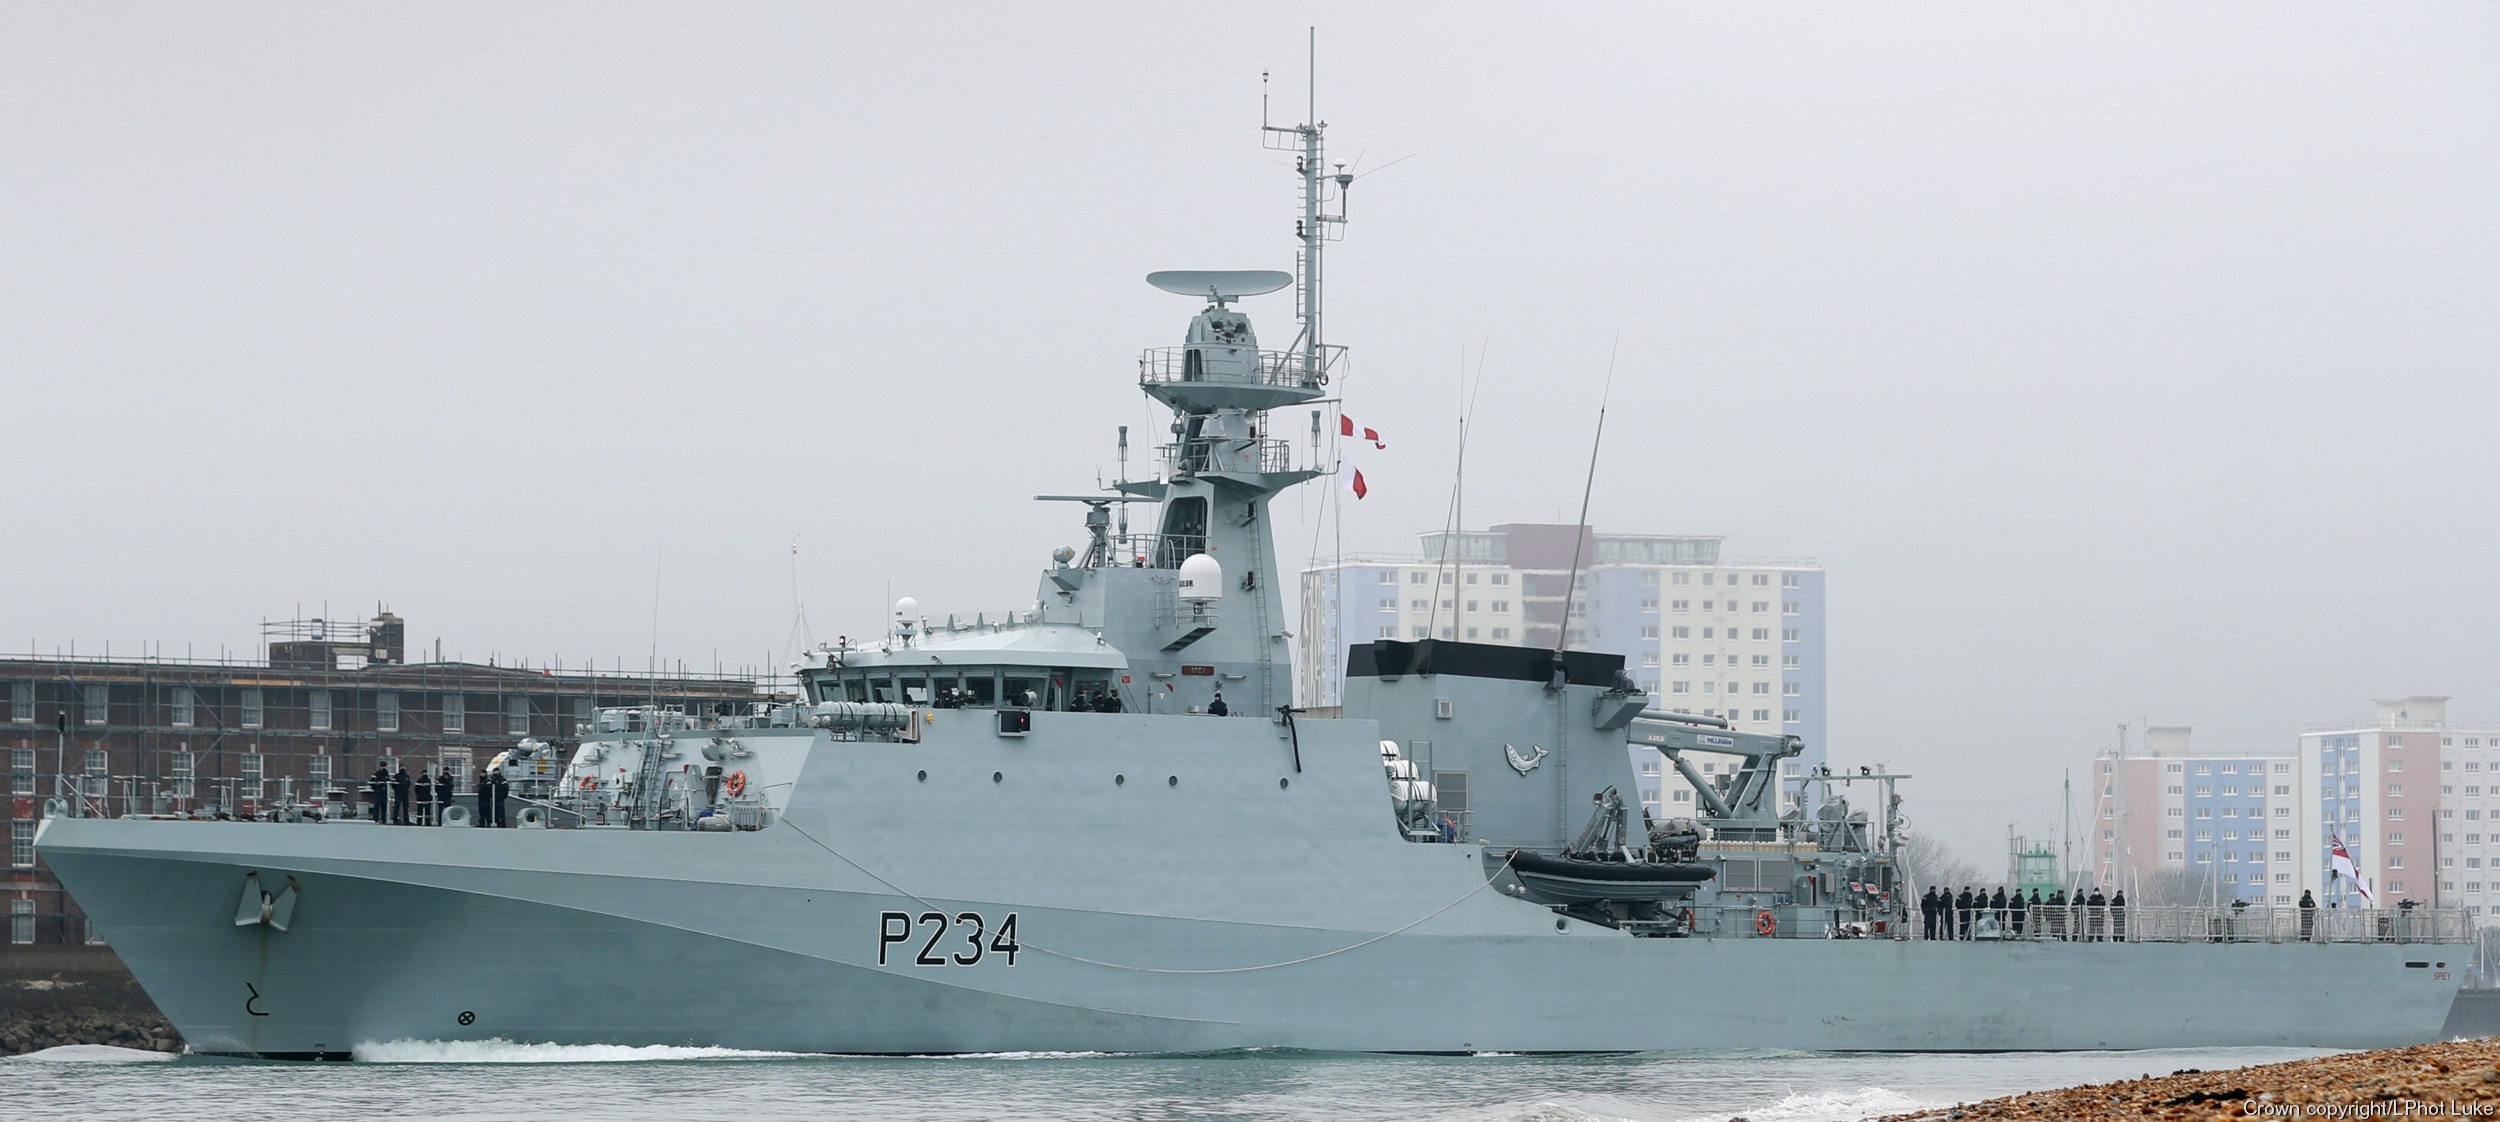 p-234 hms spey river class offshore patrol vessel opv royal navy 14